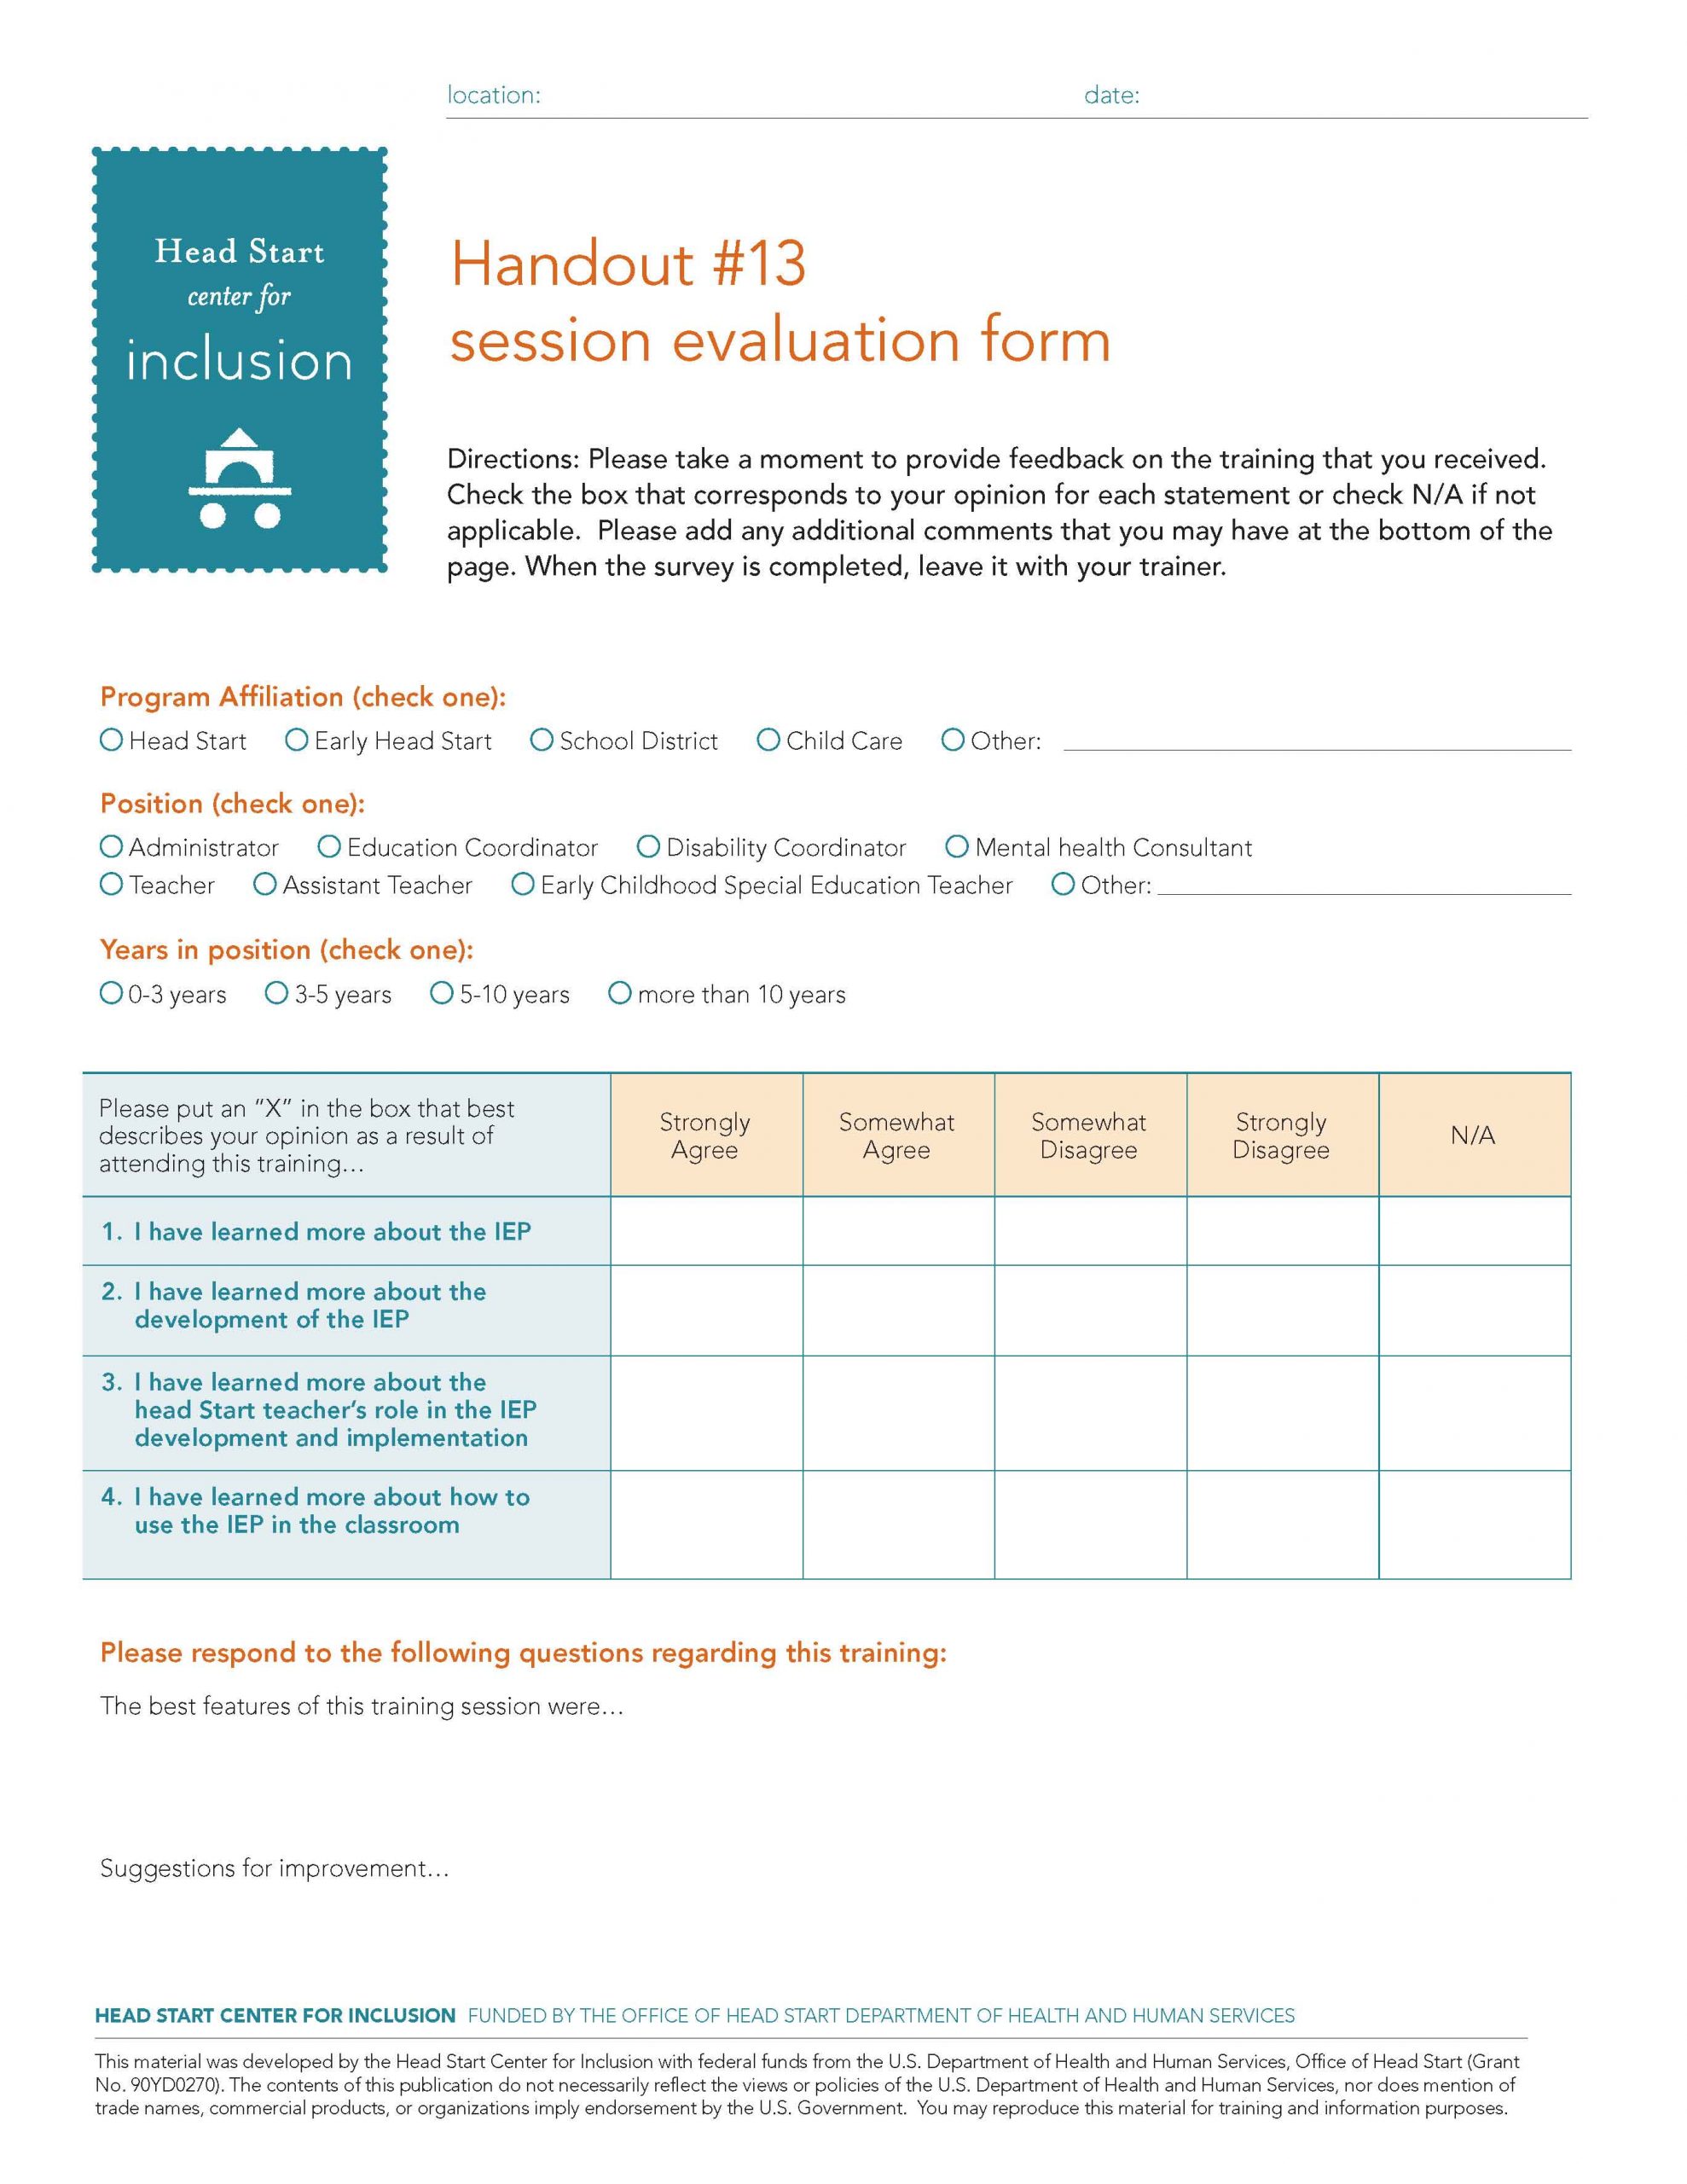 Session Evaluation Form